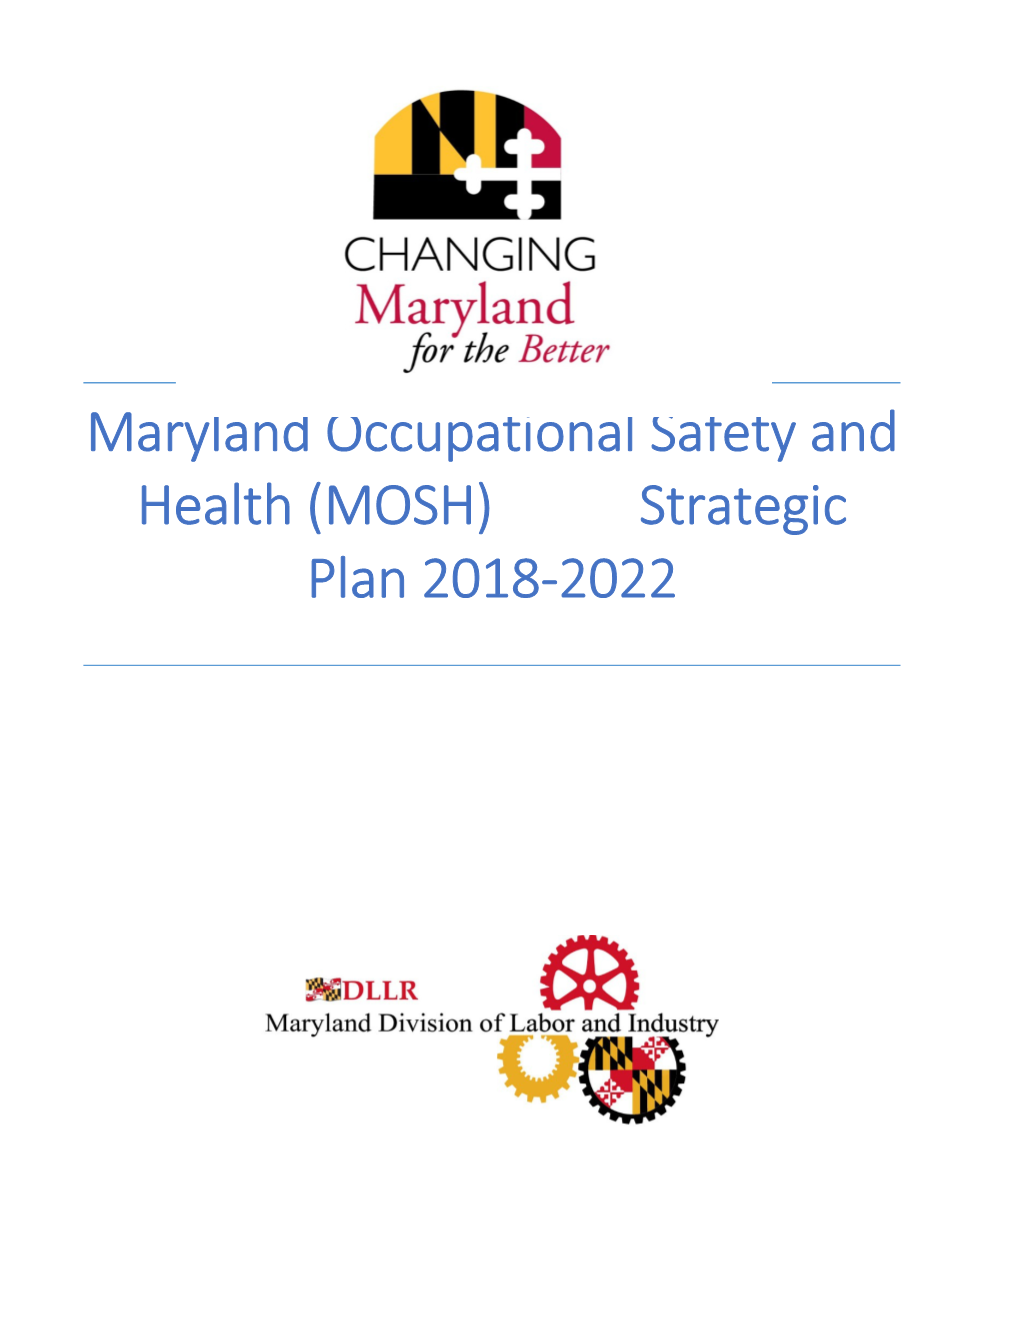 Maryland Occupational Safety and Health (MOSH) Strategic Plan 2018-2022